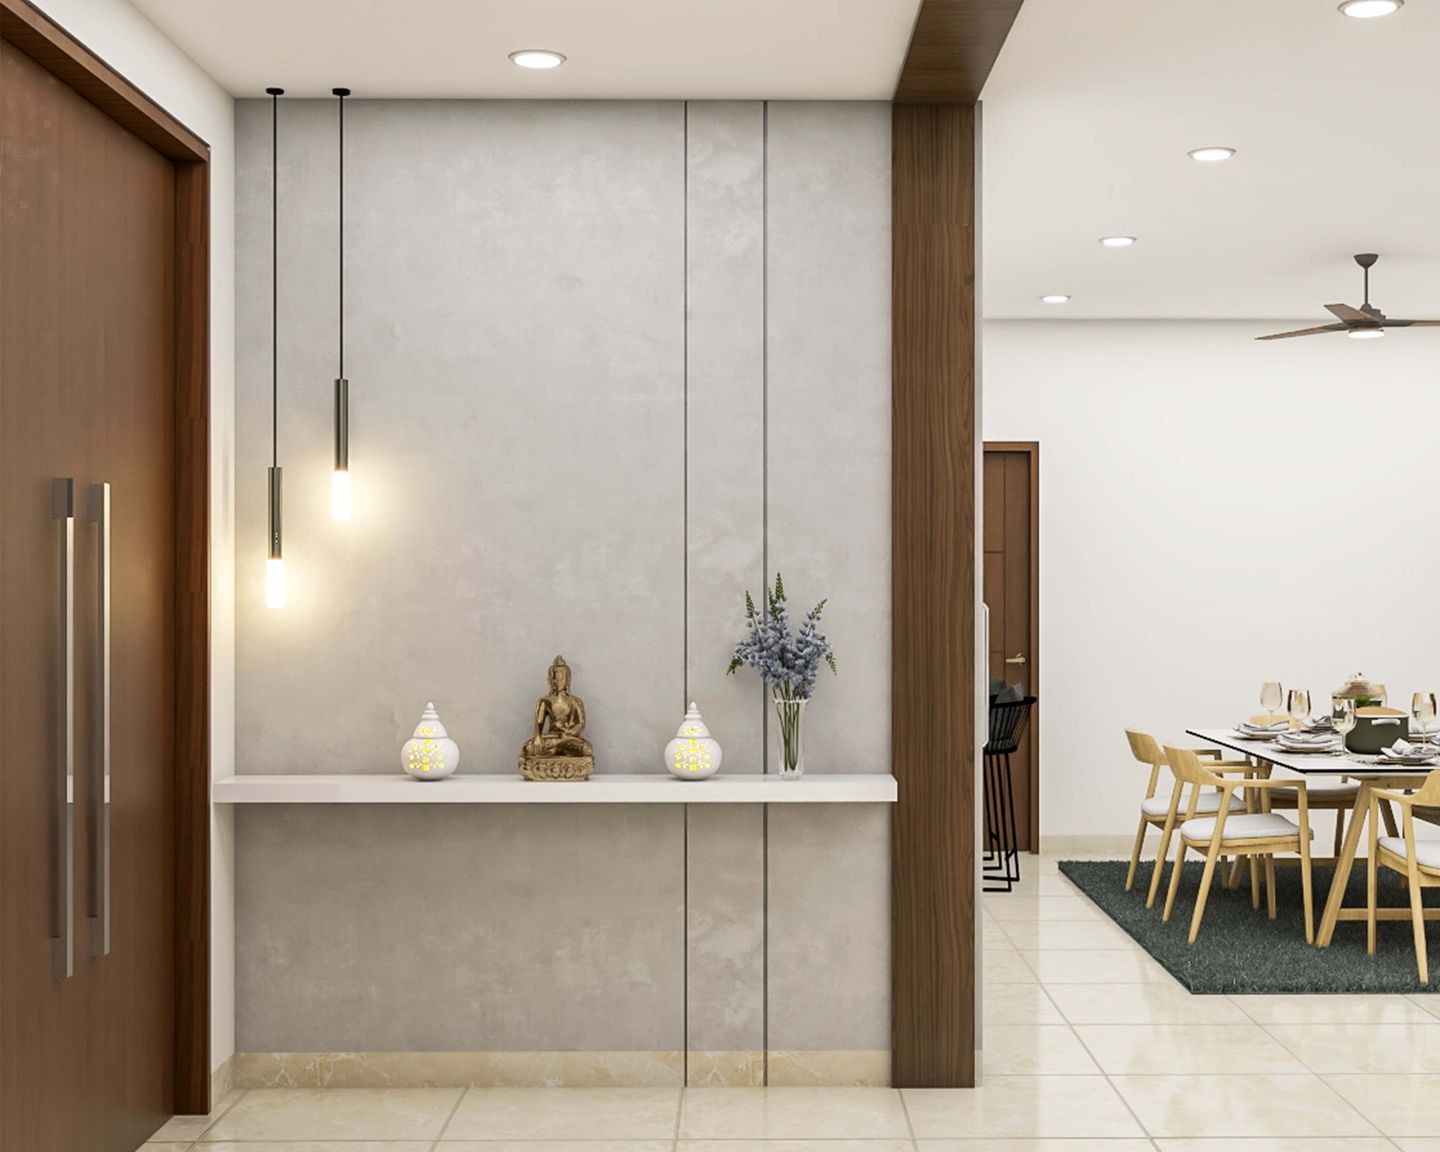 Foyer Design With Hanging Lights - Livspace